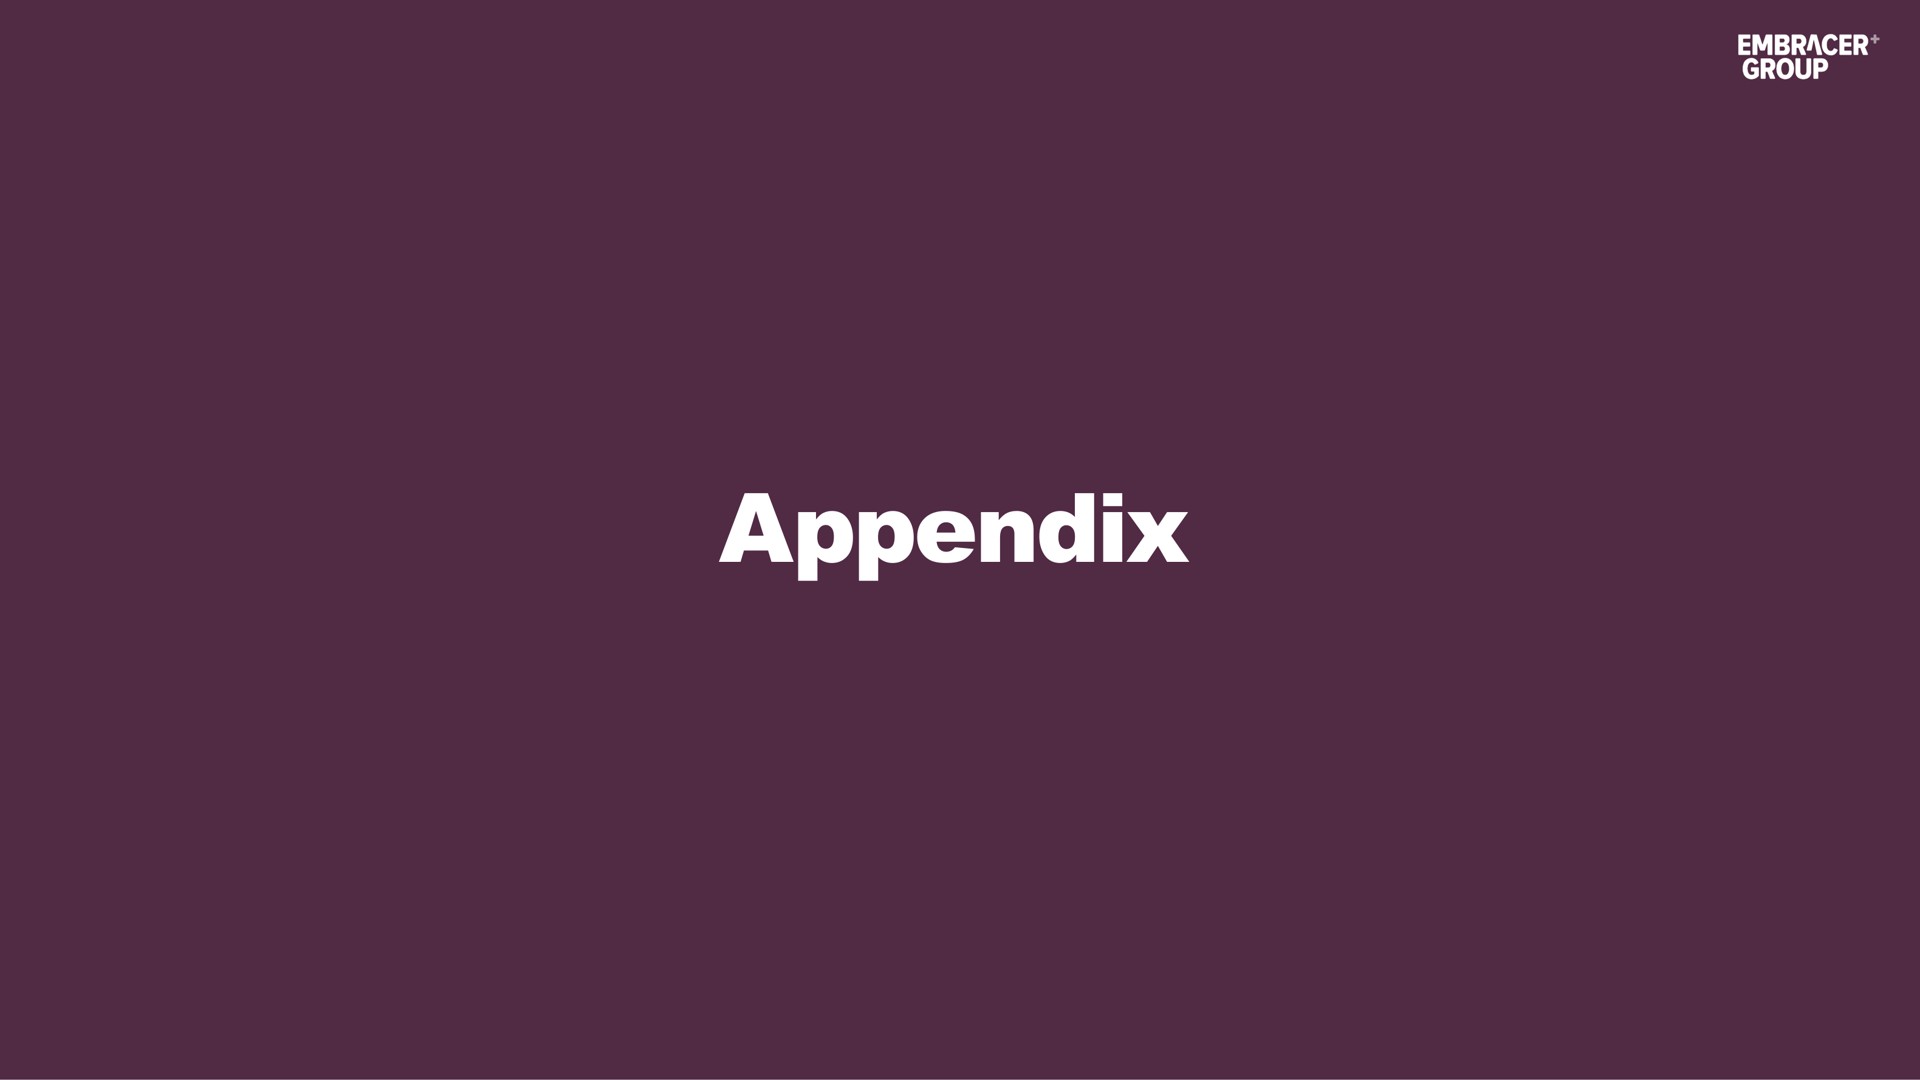 appendix | Embracer Group